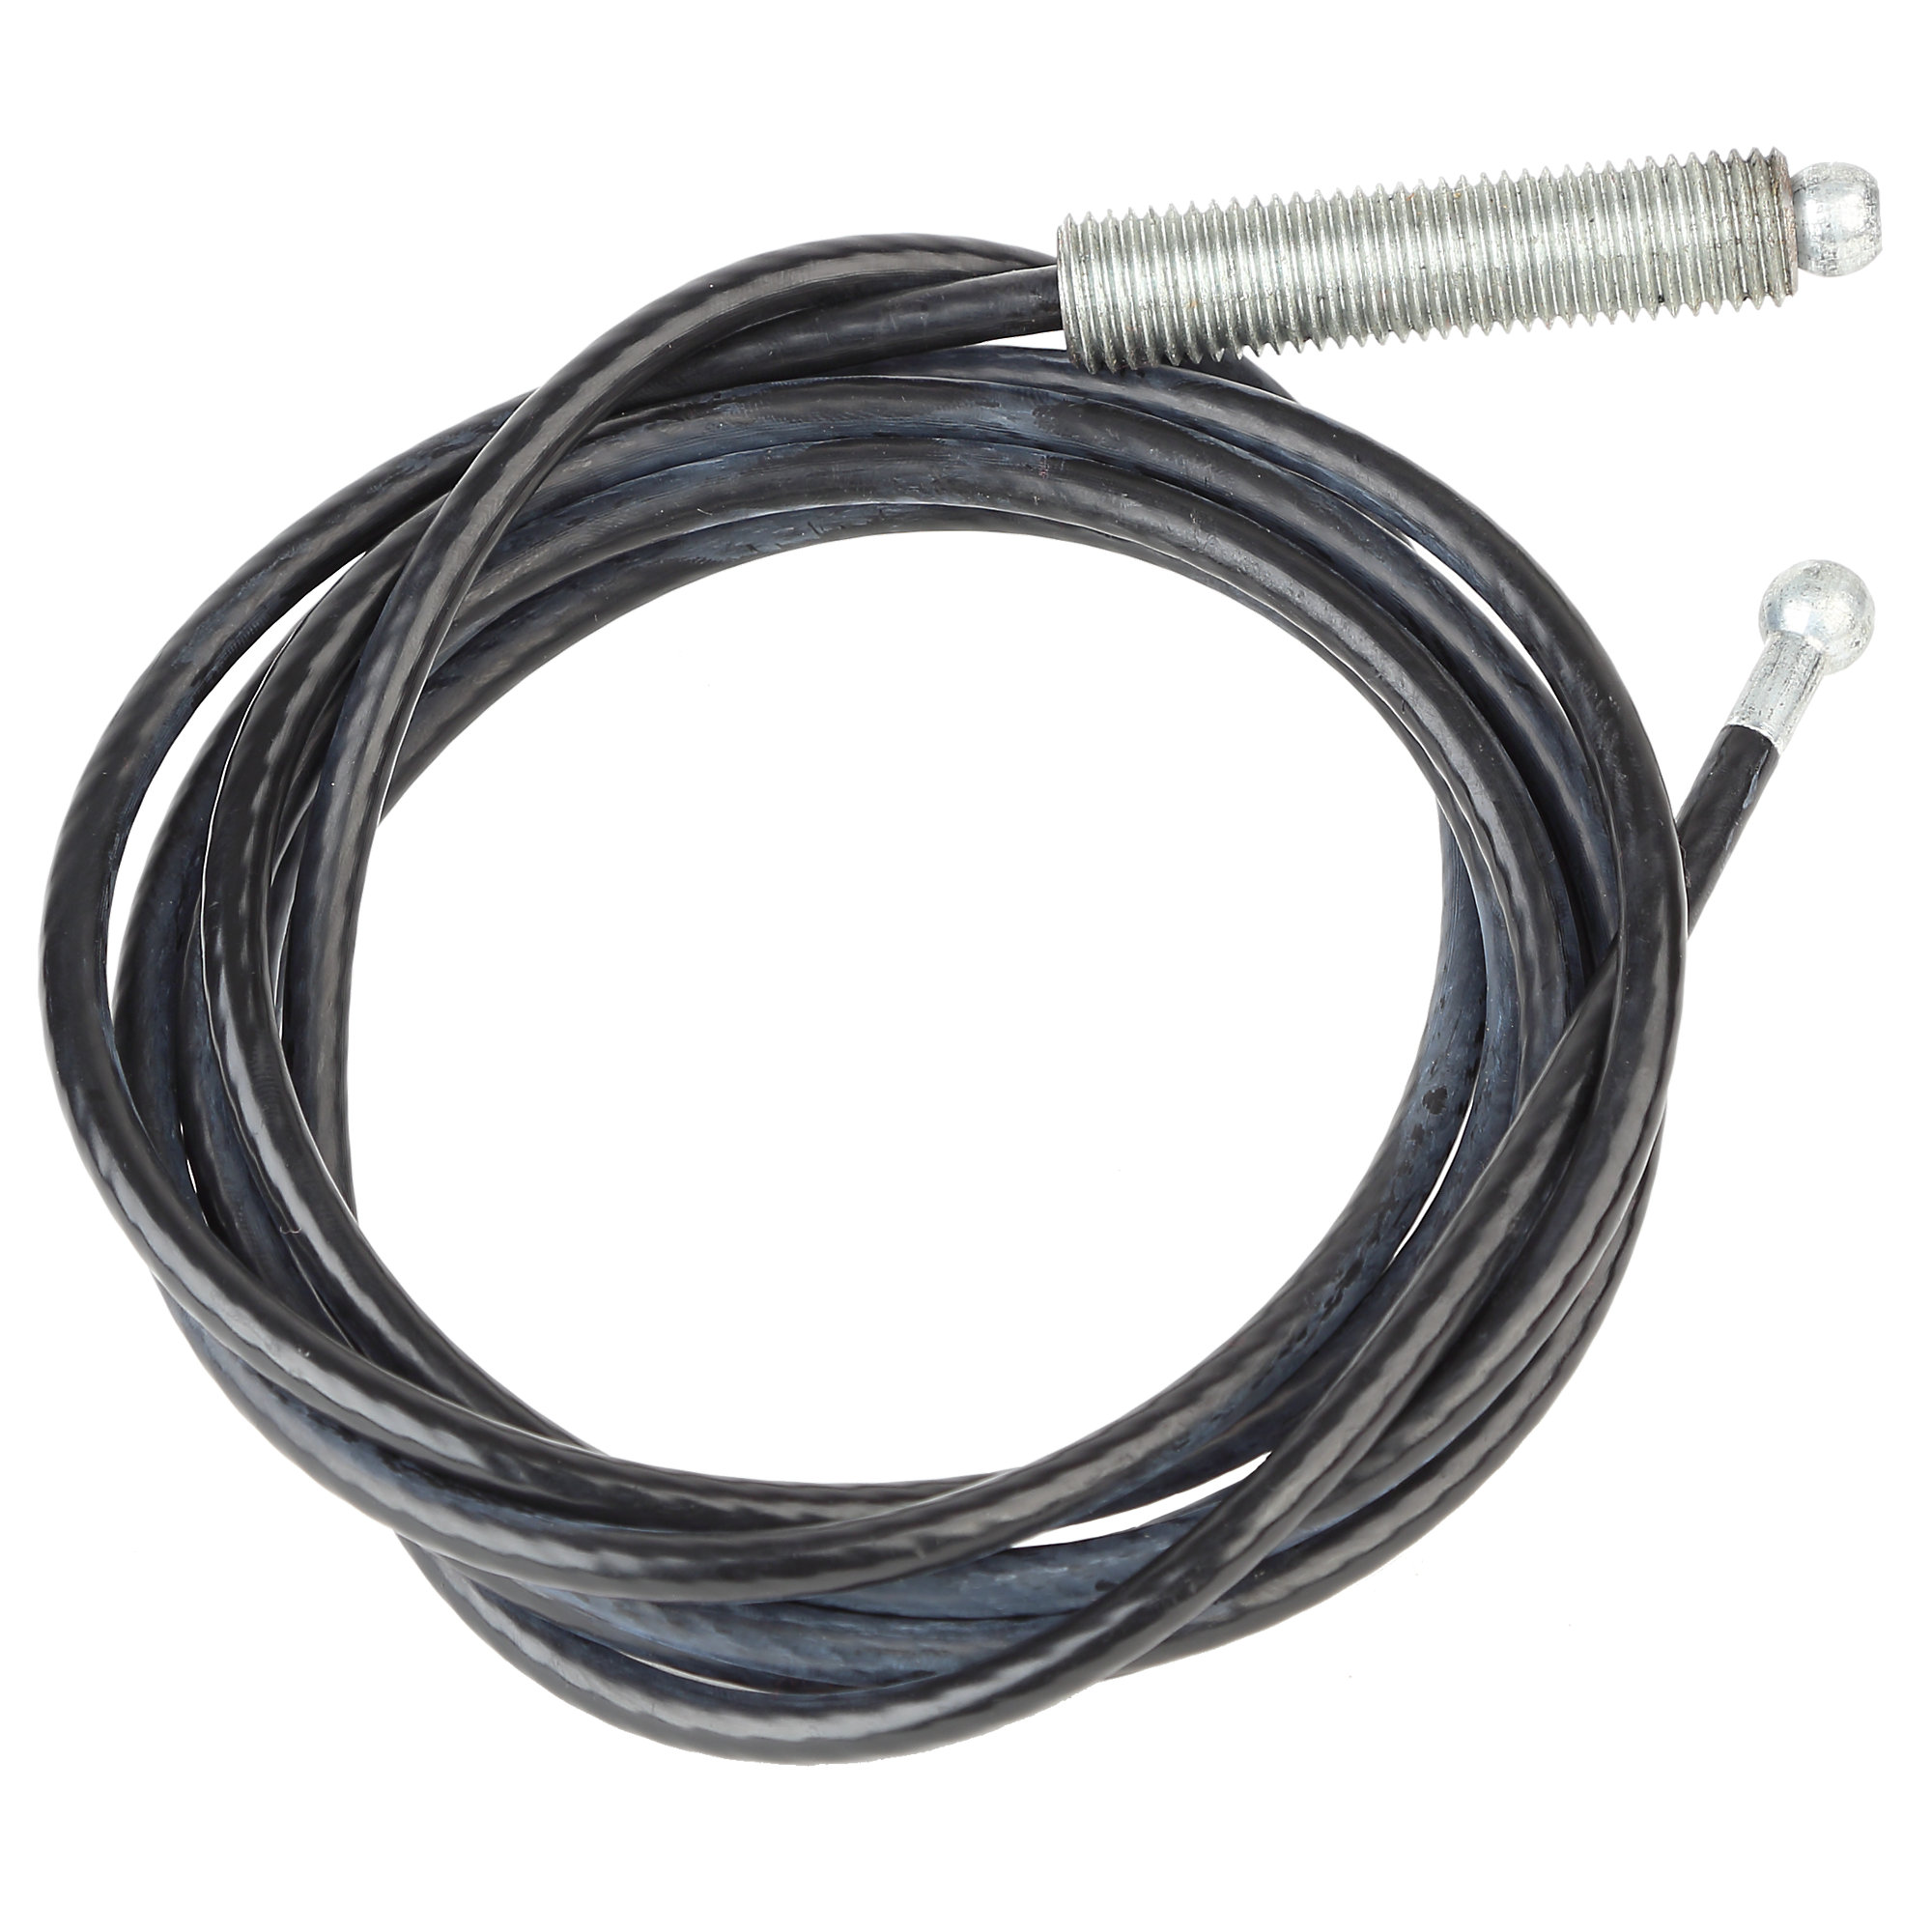 Cable PSADC 105-3/4" Pro 2 LifeFitness